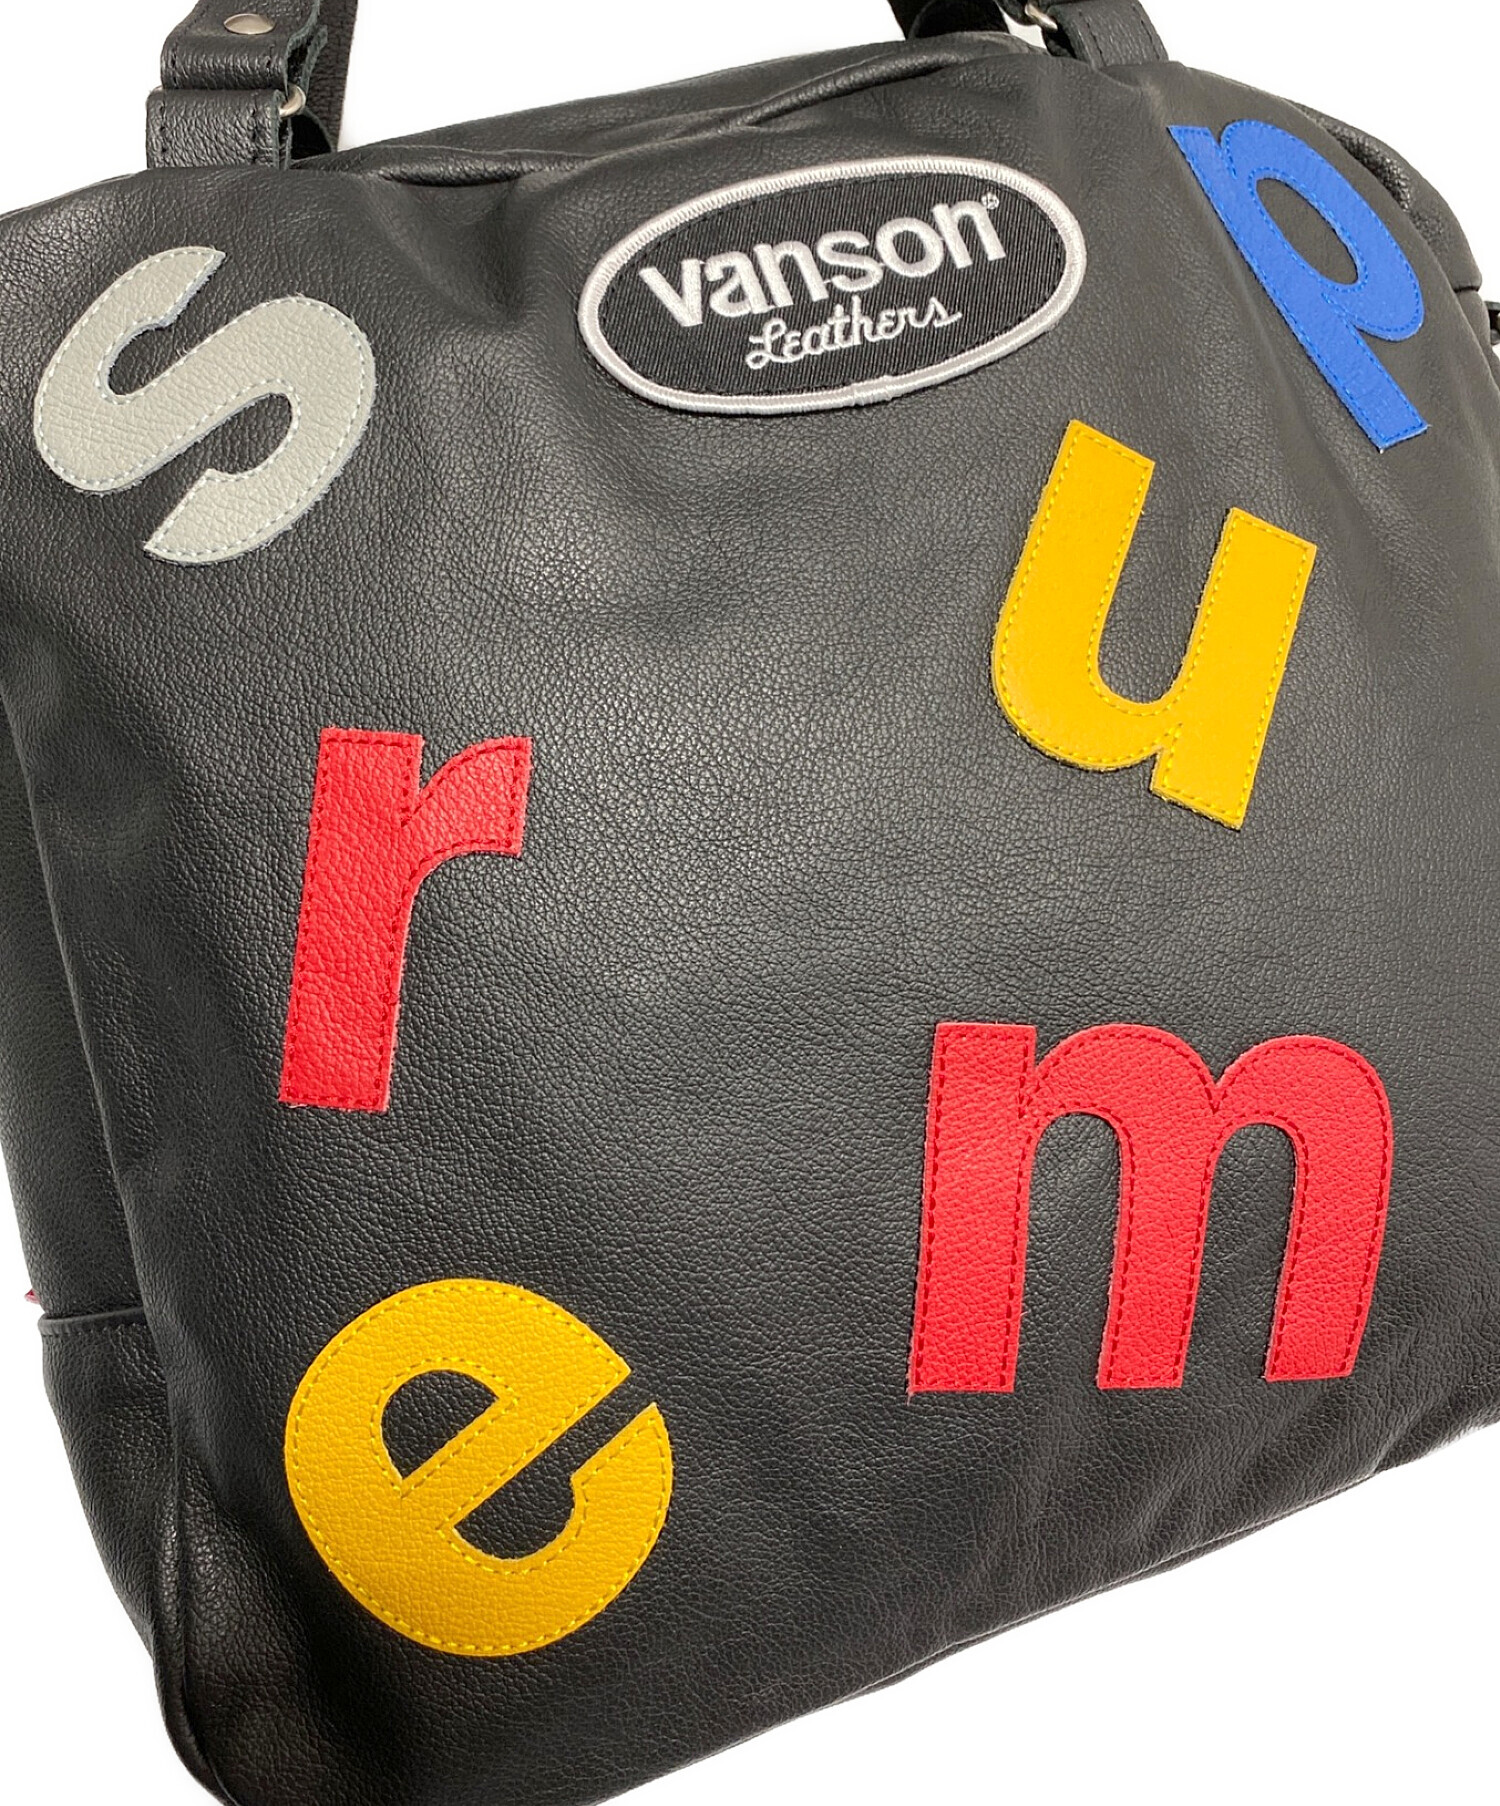 supreme vanson leathers Letter bag